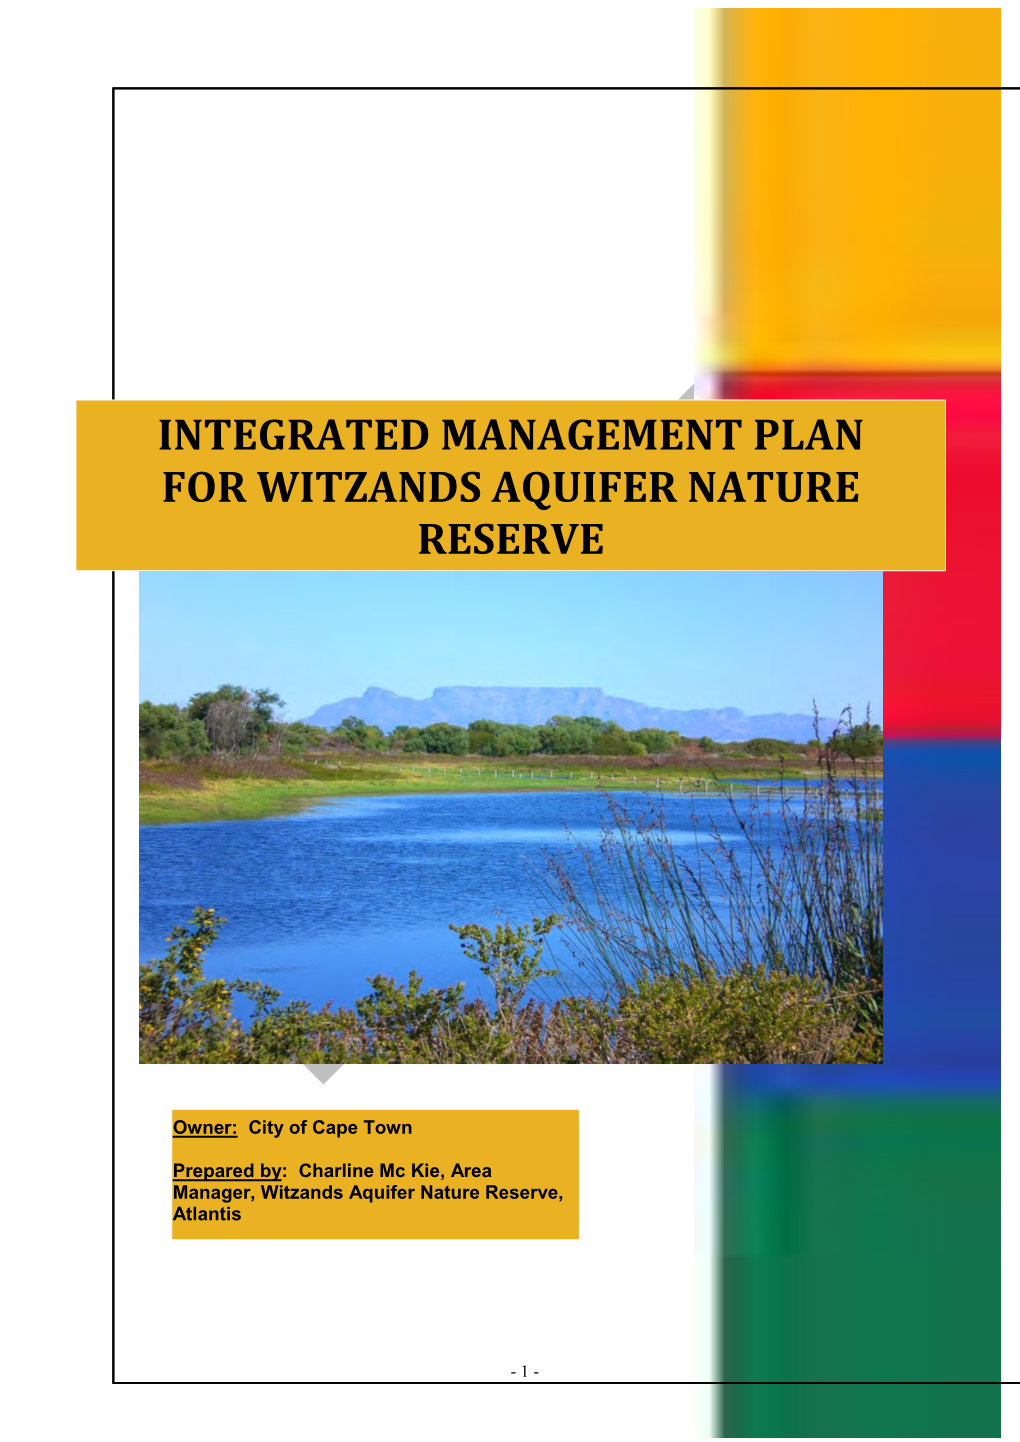 Integrated Management Plan for Witzands Aquifer Nature Reserve